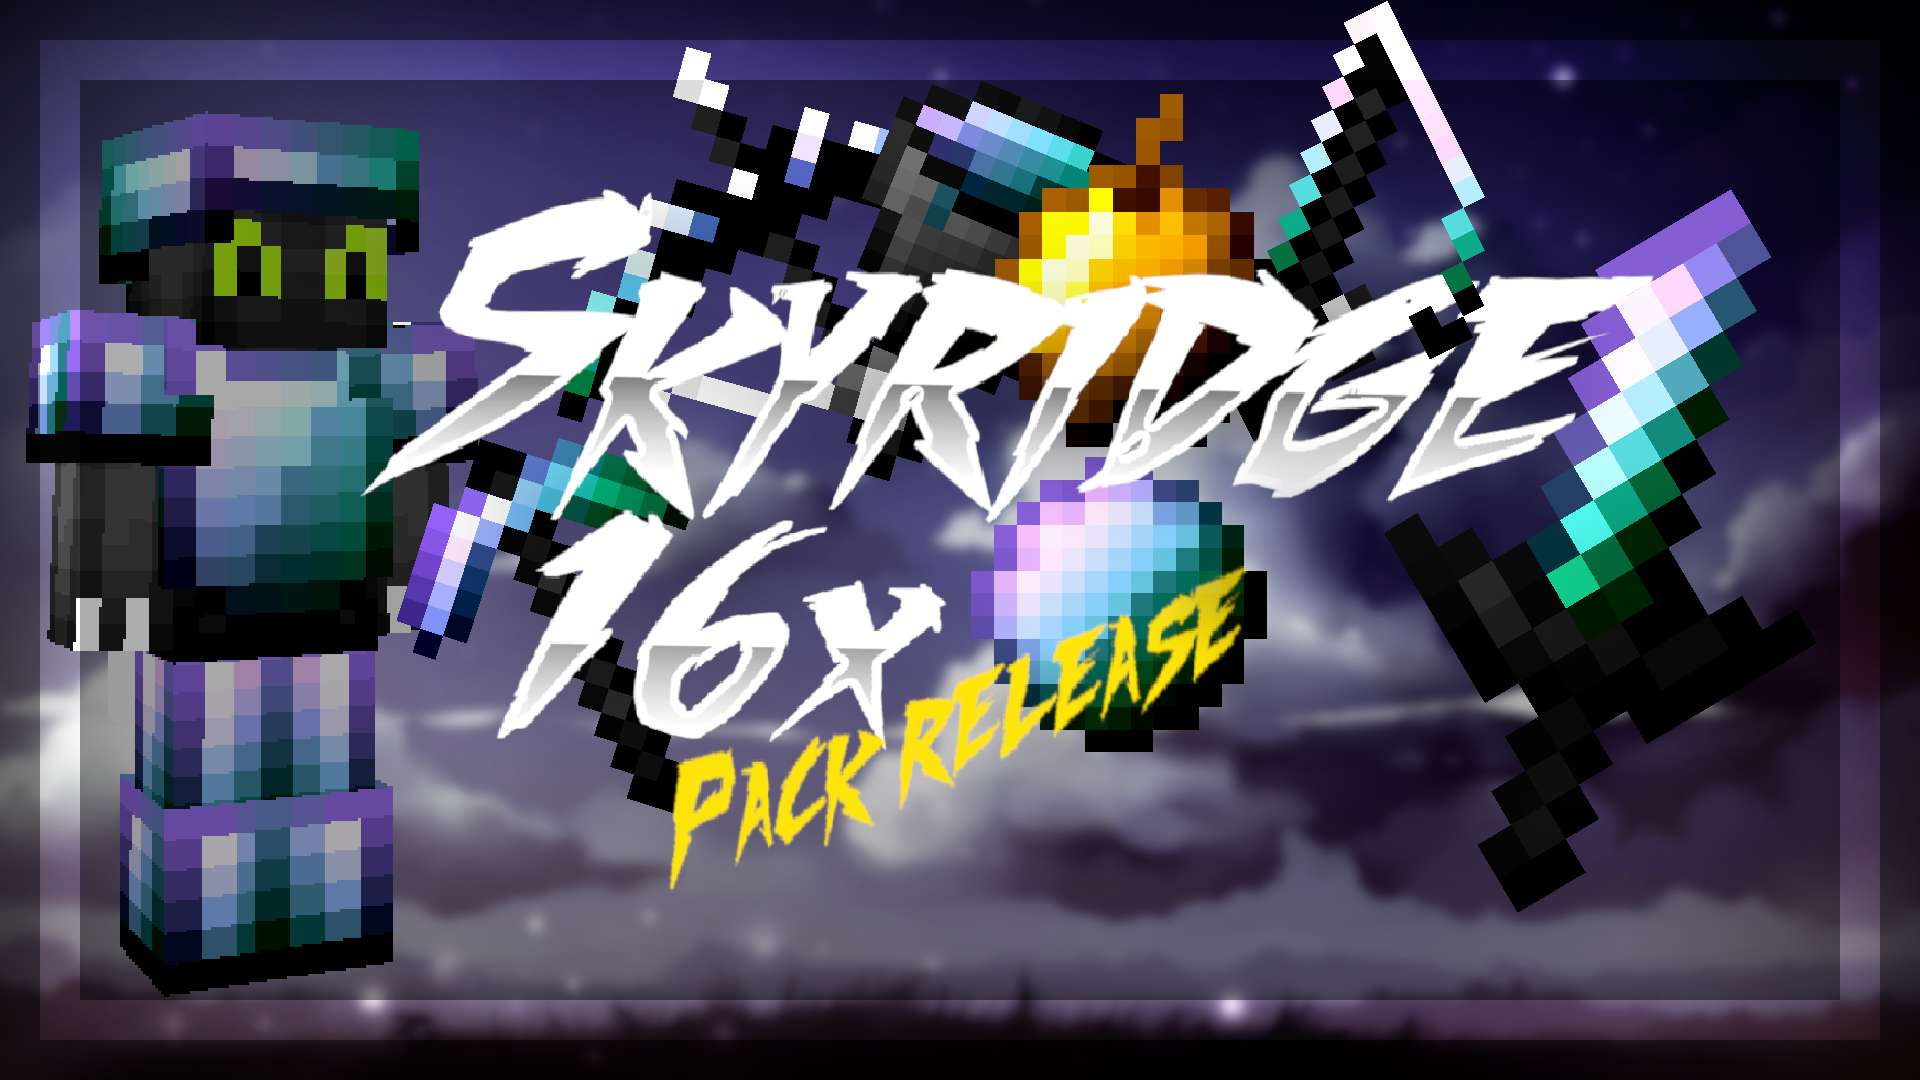 Skyridge 16 by MattePacks on PvPRP